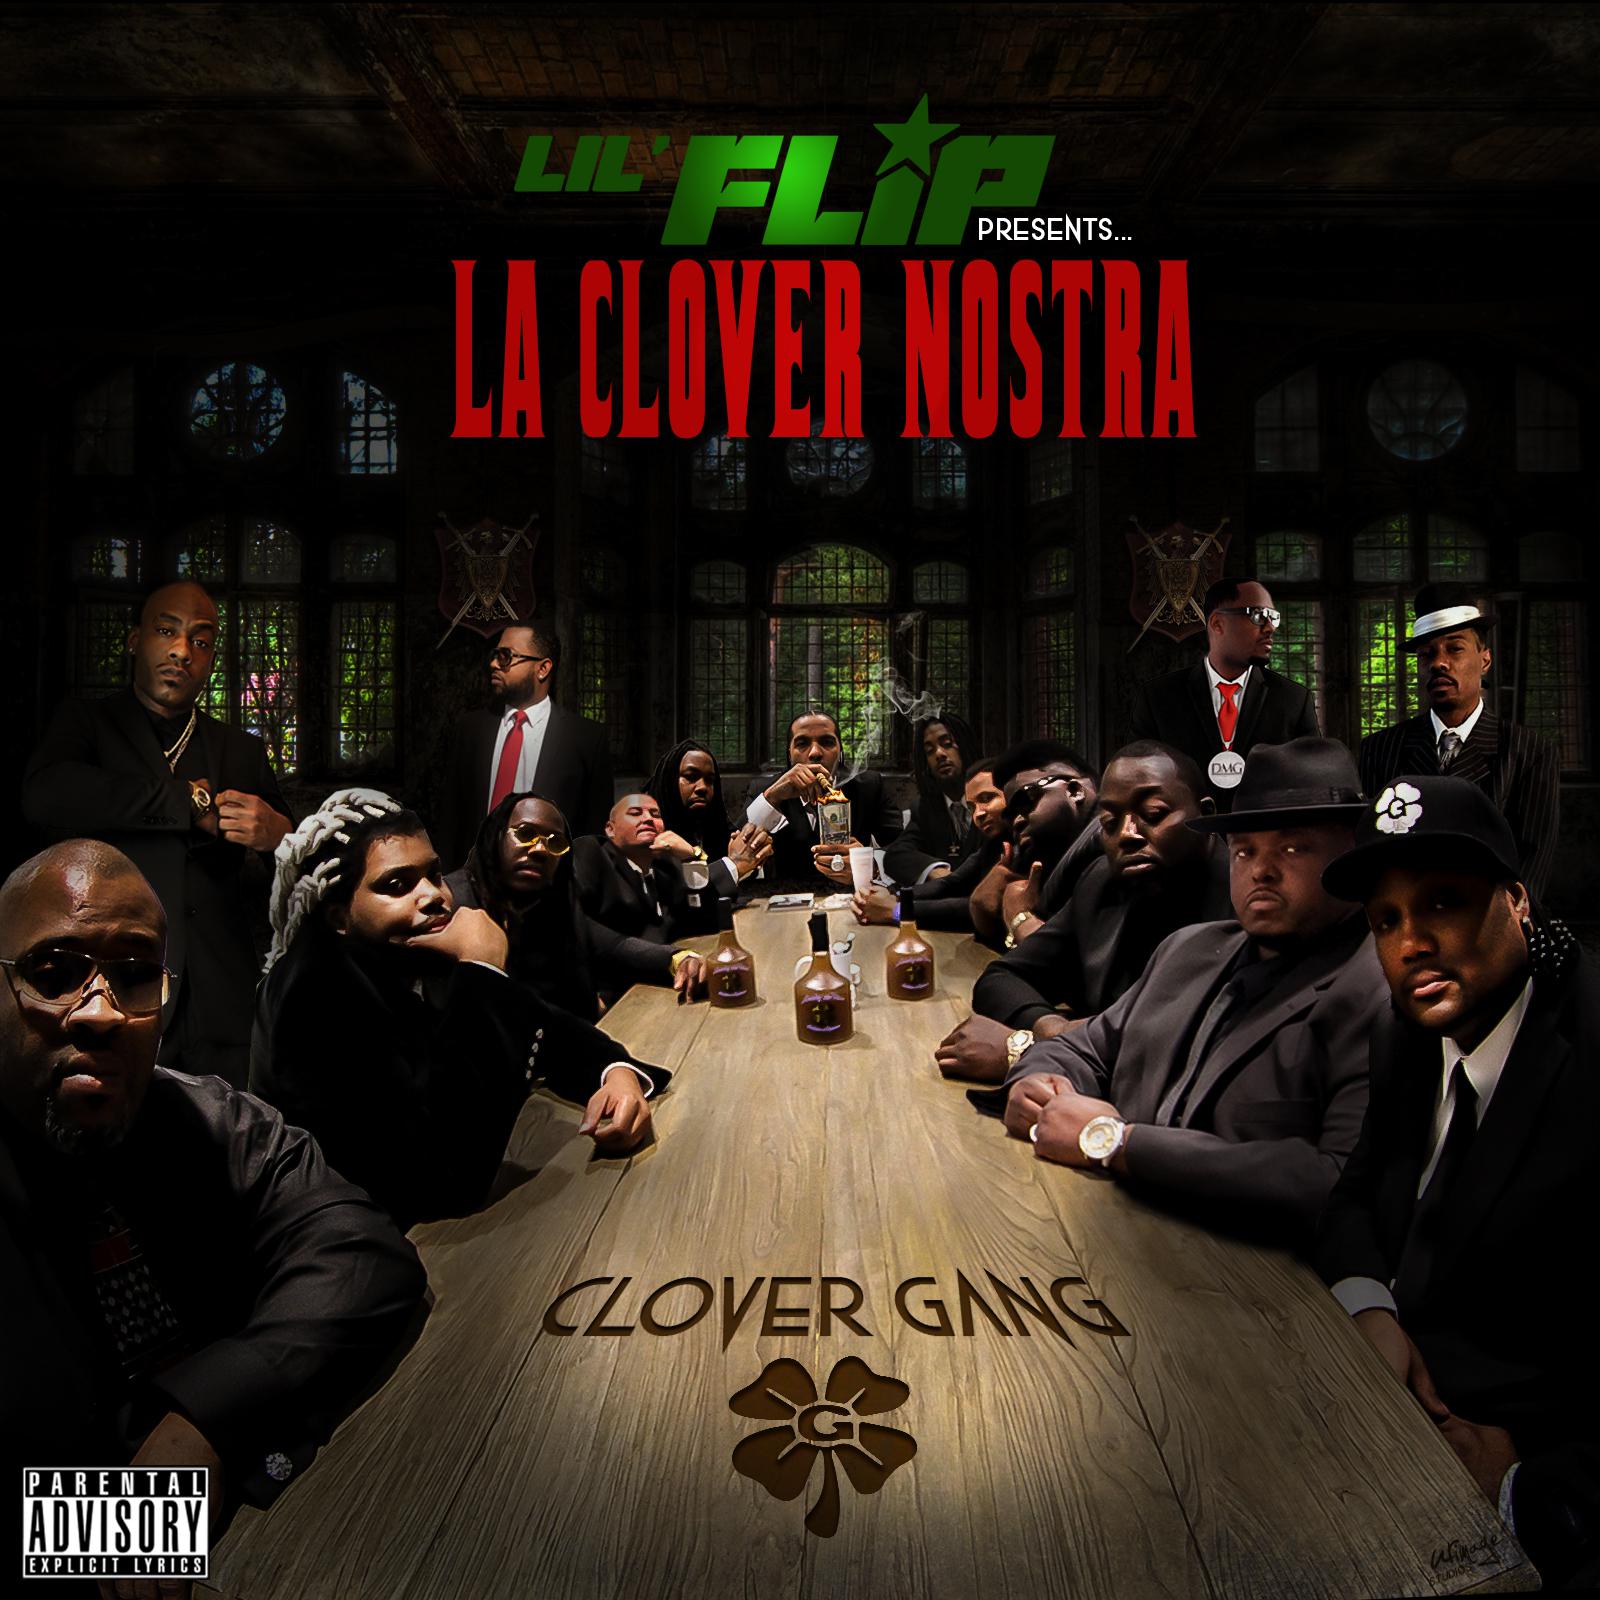 La Clover Nostra: Clover Gang